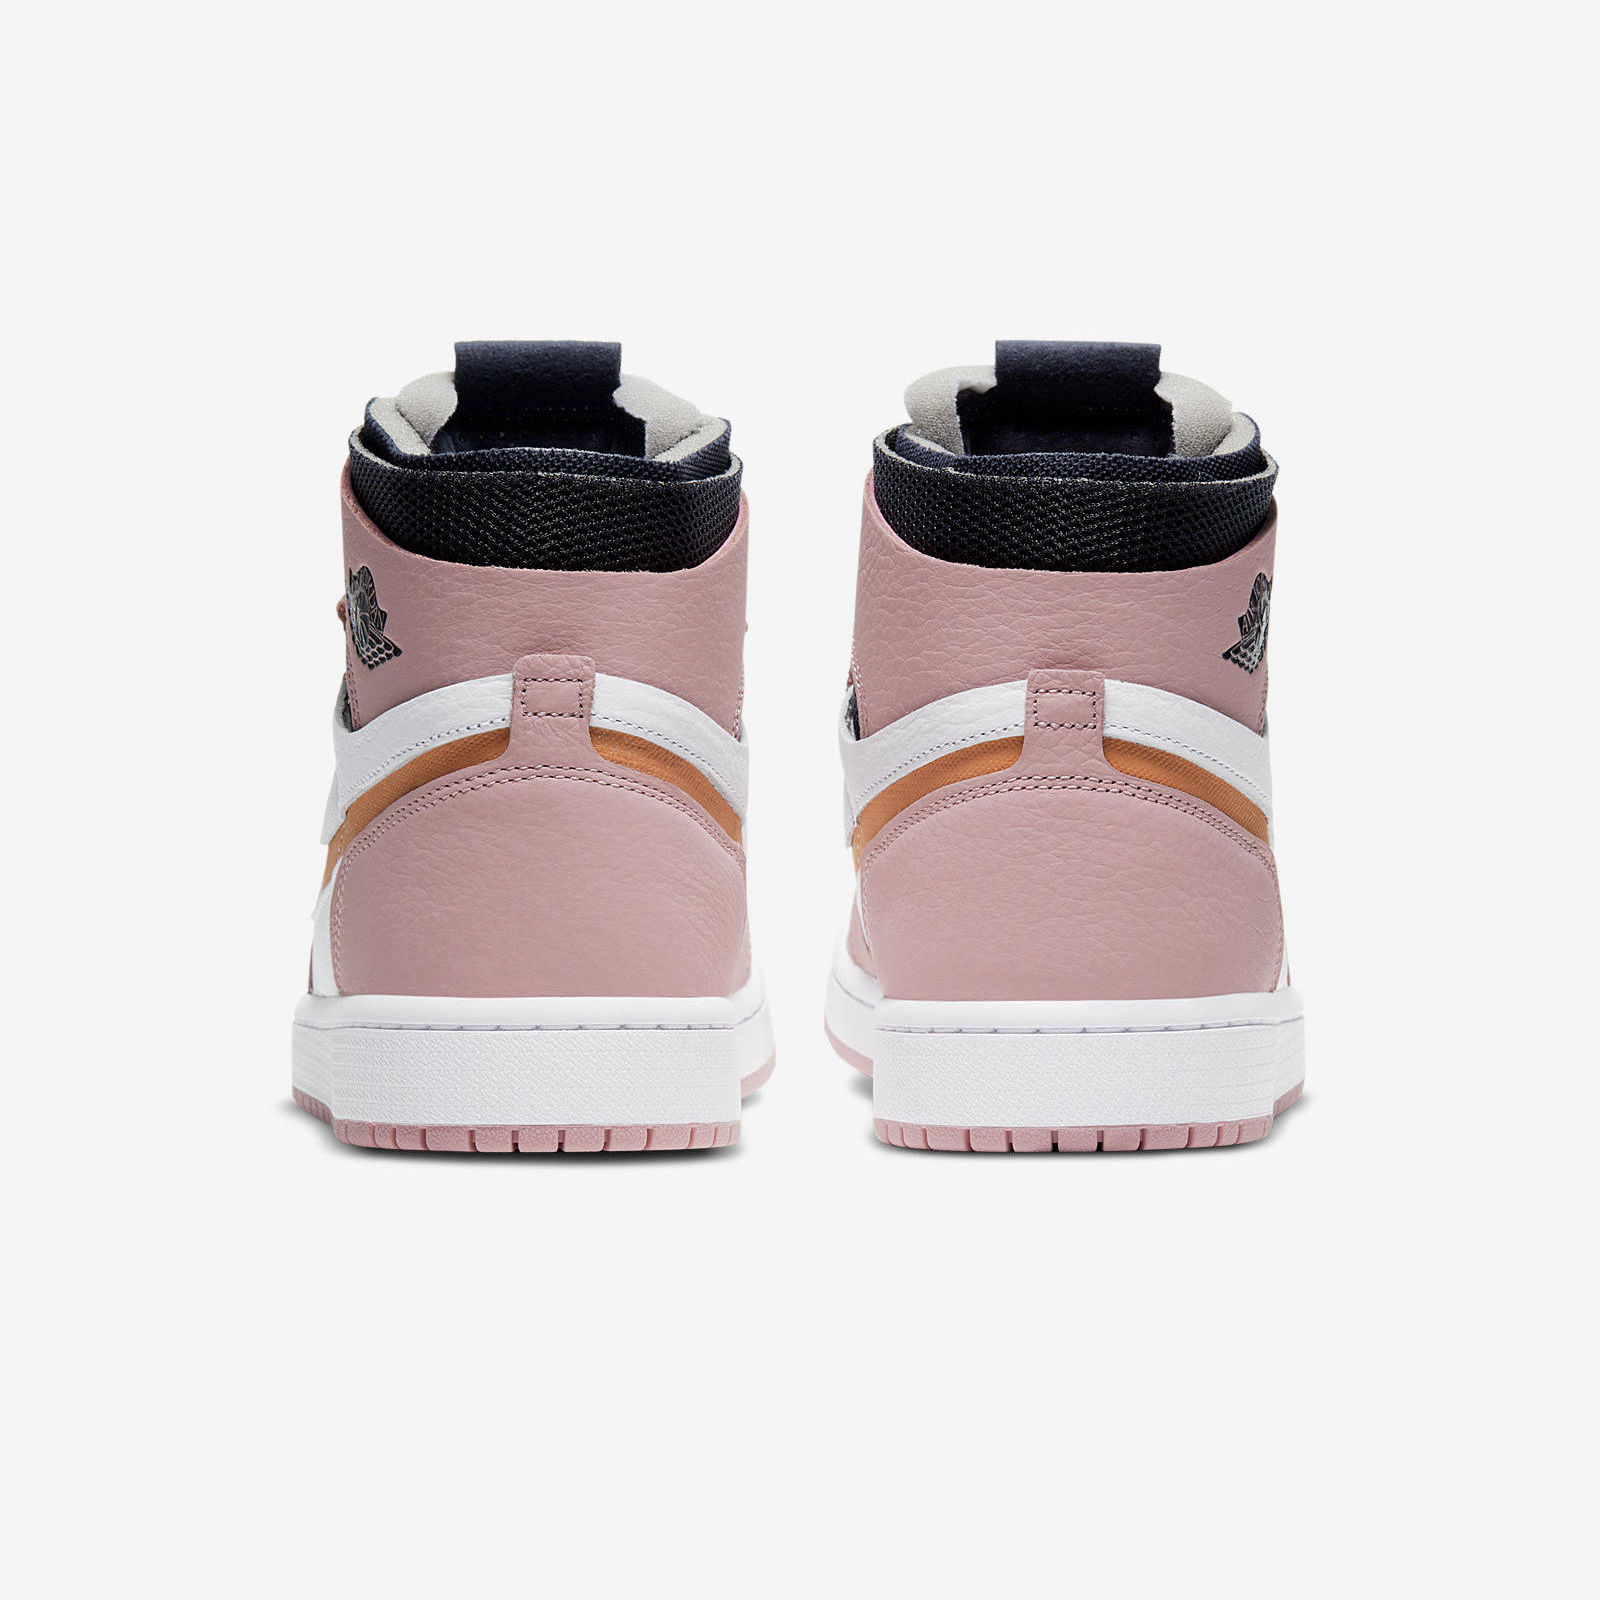 Air Jordan 1 Zoom Comfort
« Pink Glaze »